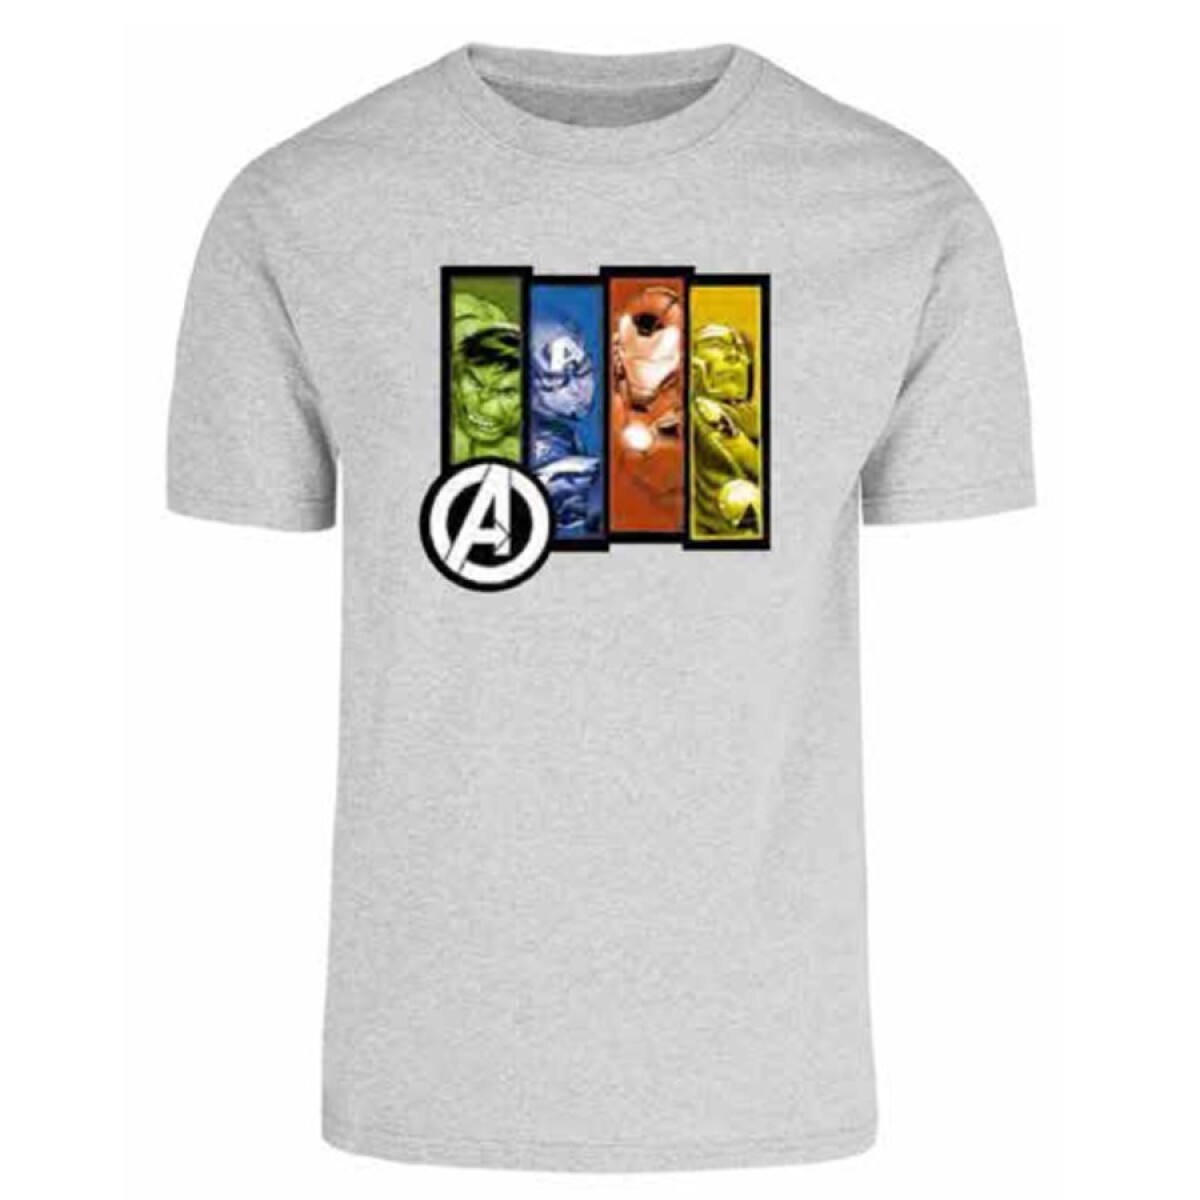 Camiseta Remera Infantil Marvel Avengers - GRIS-CLARO 